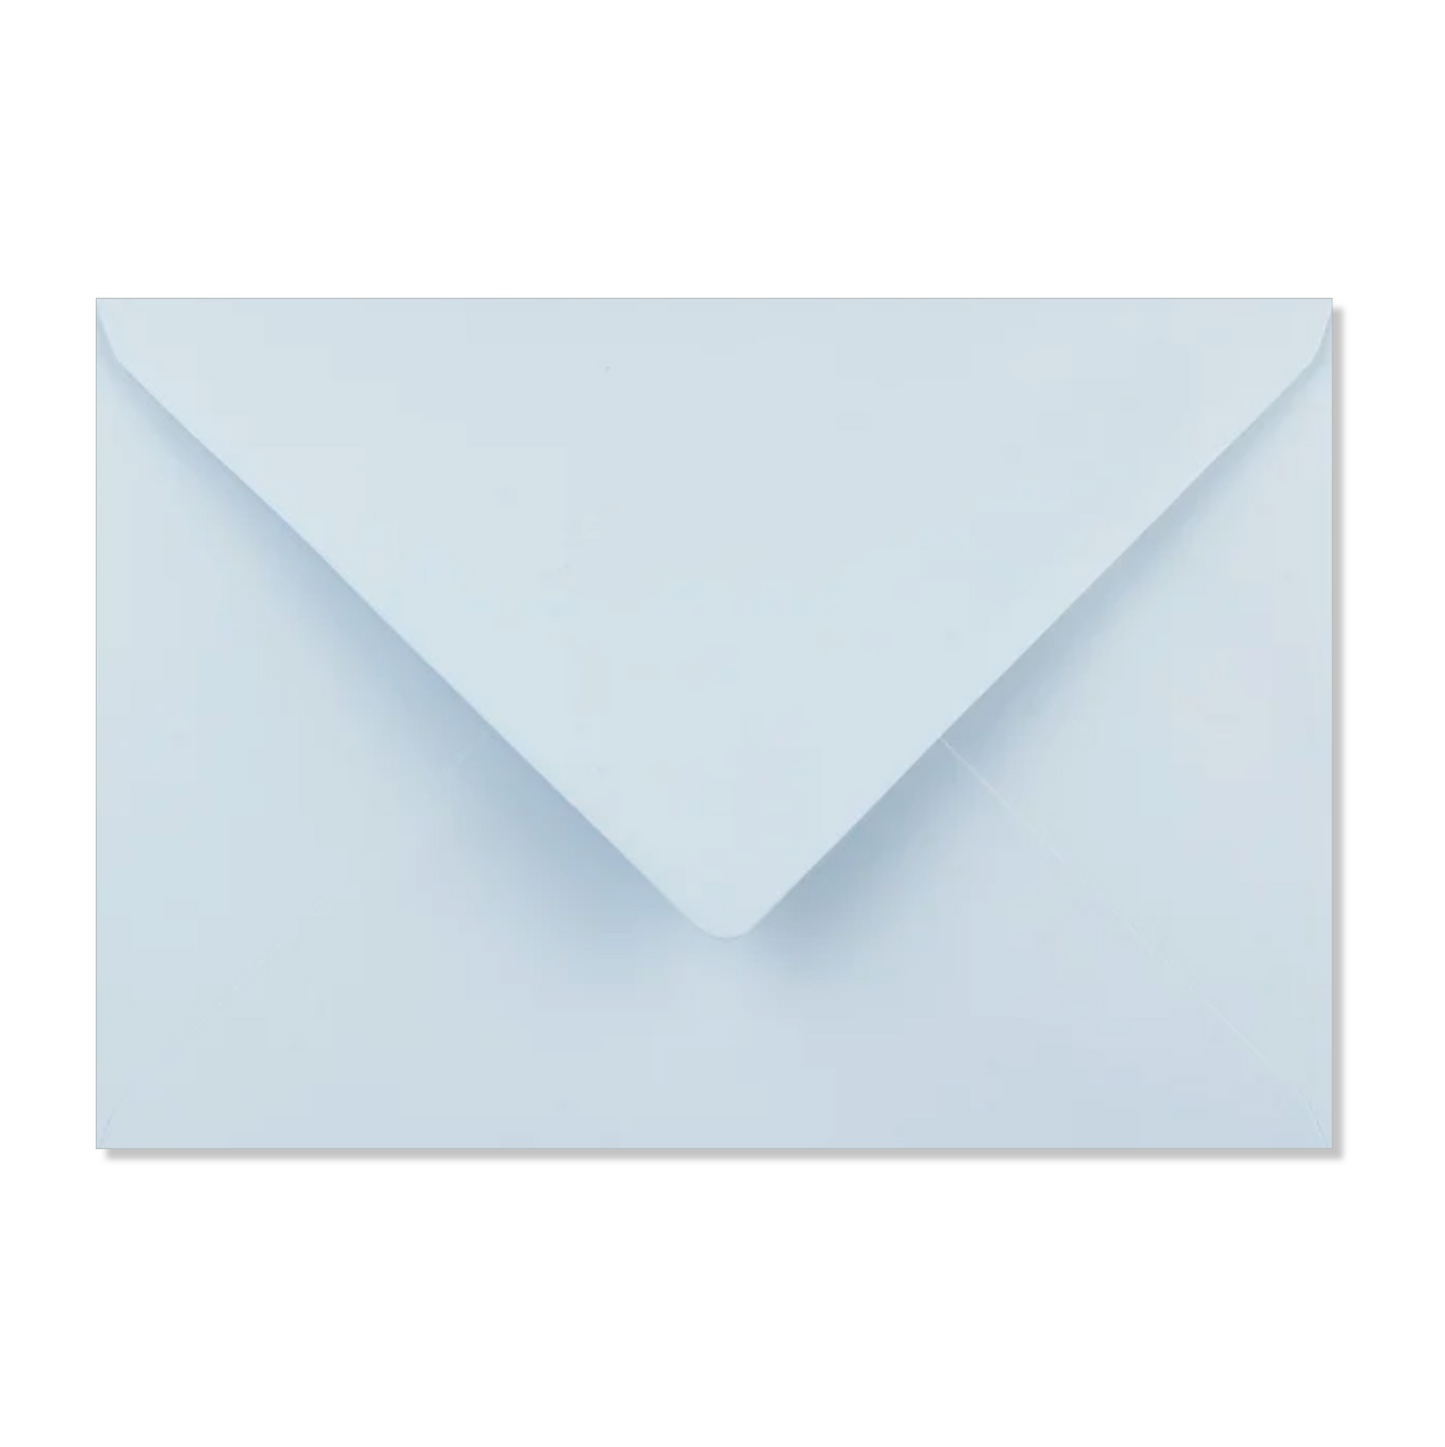 25 Enveloppes bleu ciel C5